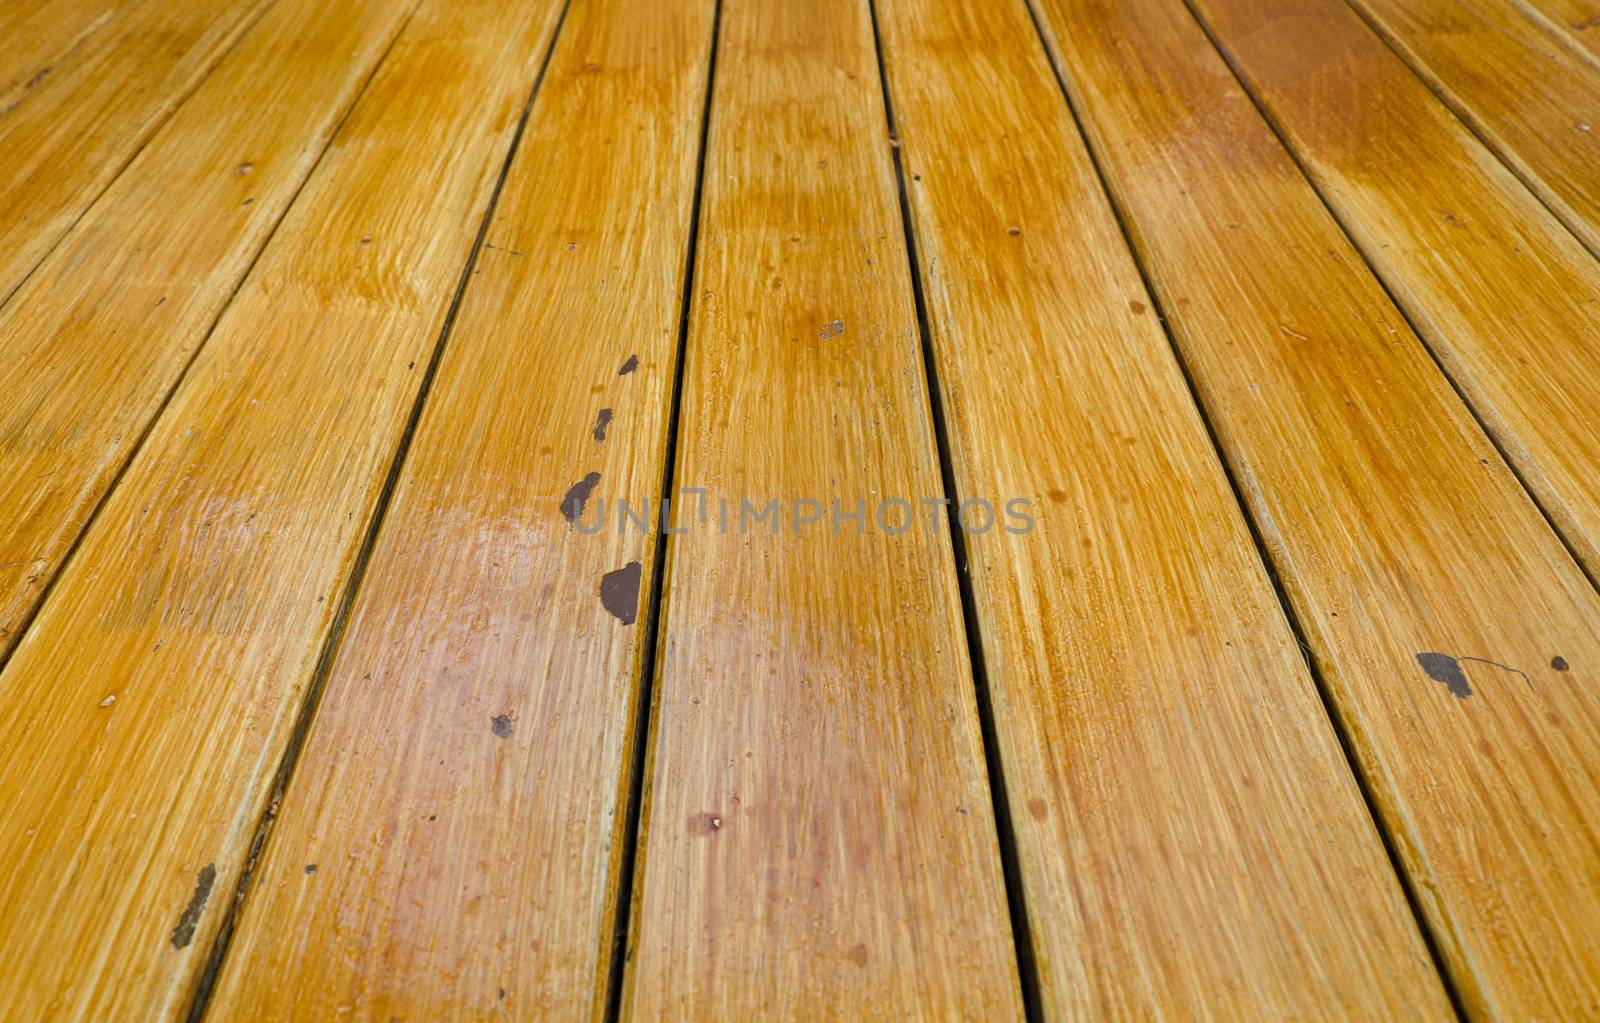 plank wood floor pattern background